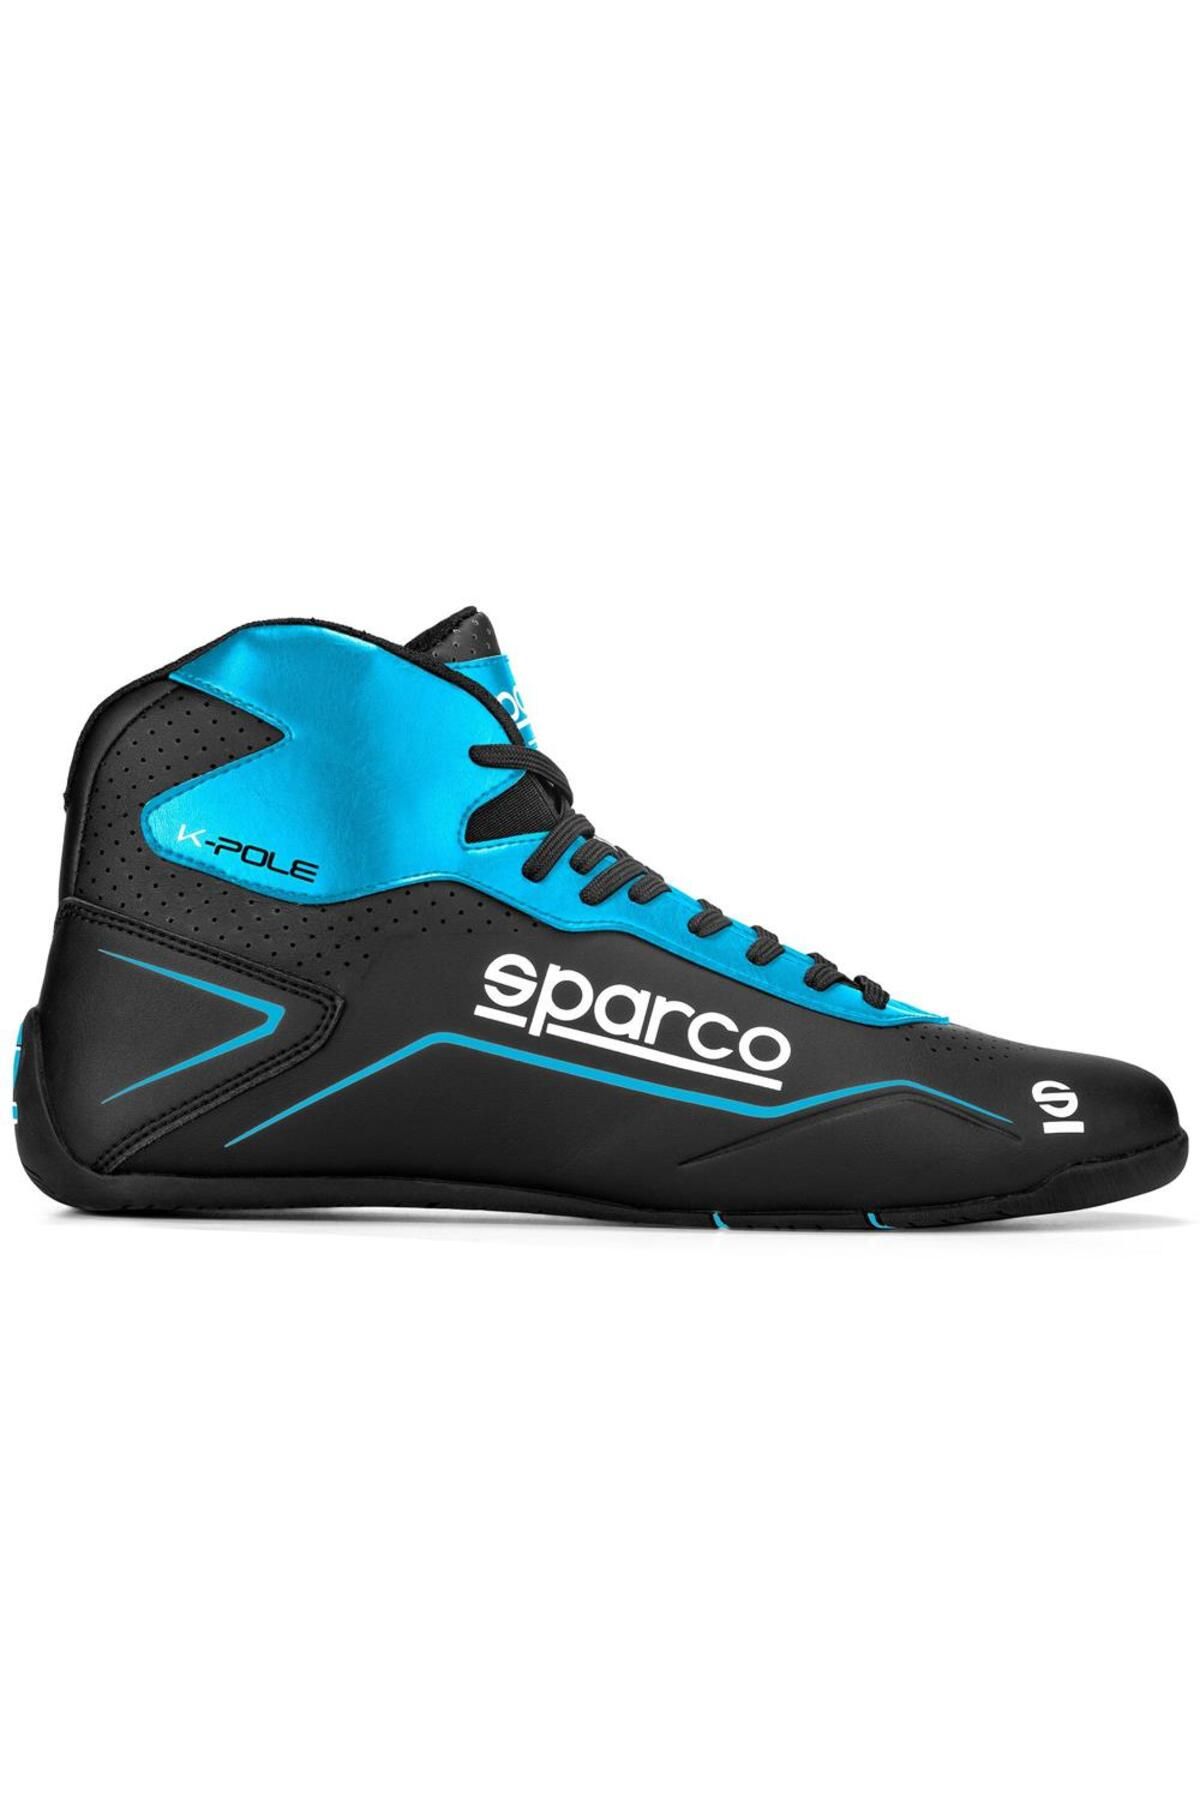 Sparco K-pole Karting Ayakkabısı Siyah Mavi 46 Numara